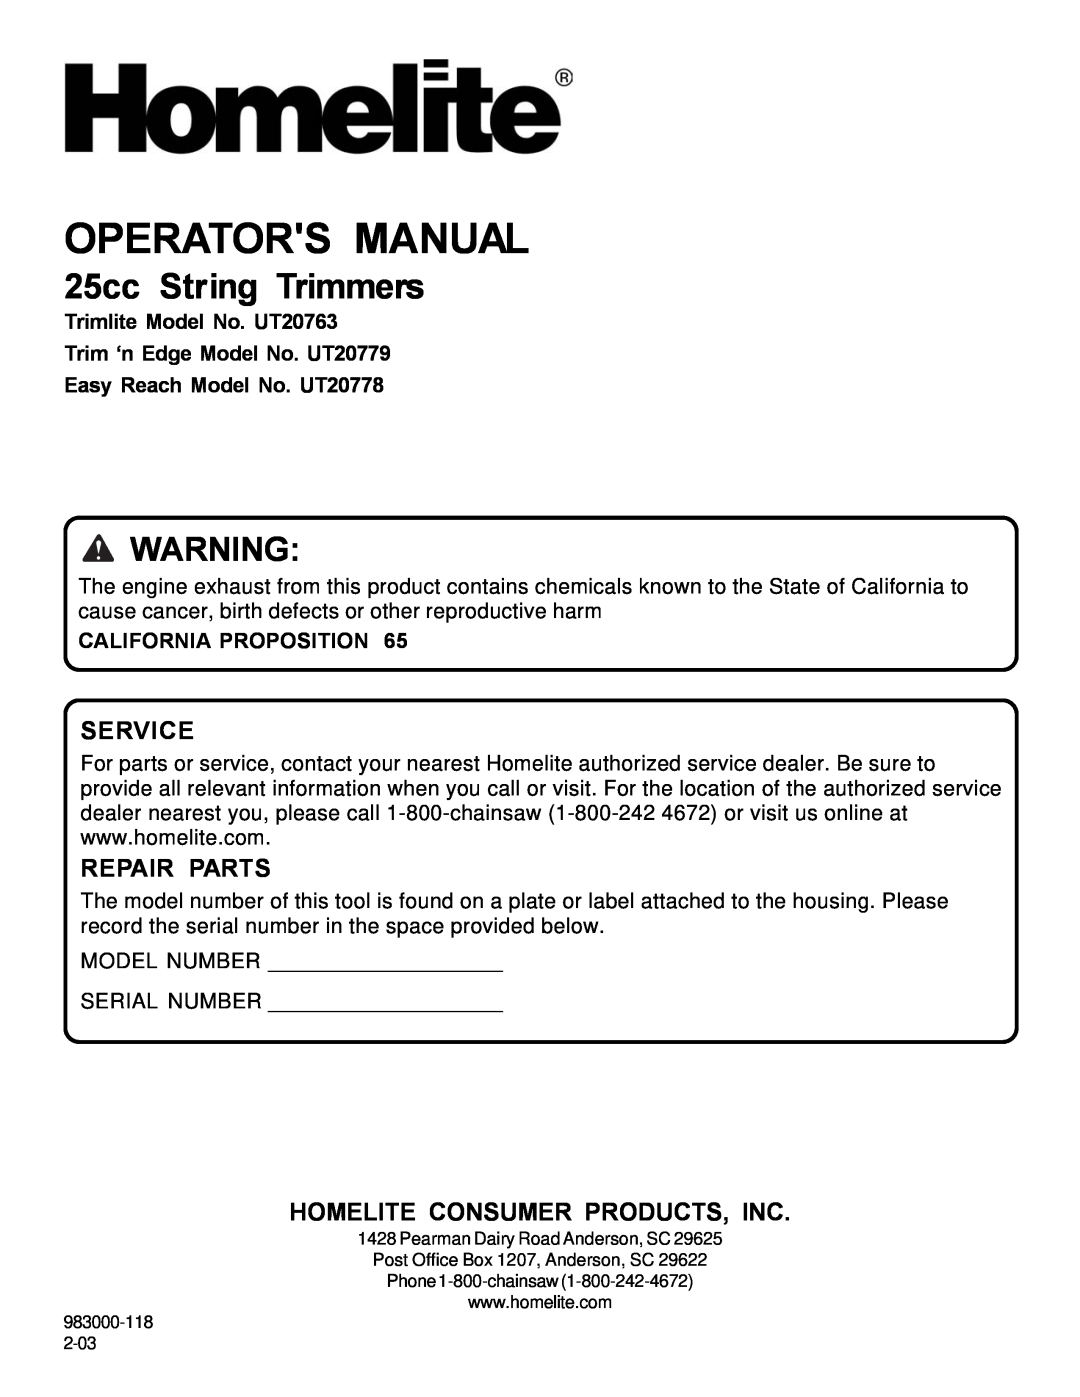 Homelite UT20763 Service, Repair Parts, Homelite Consumer Products, Inc, Easy Reach Model No. UT20778, Operators Manual 